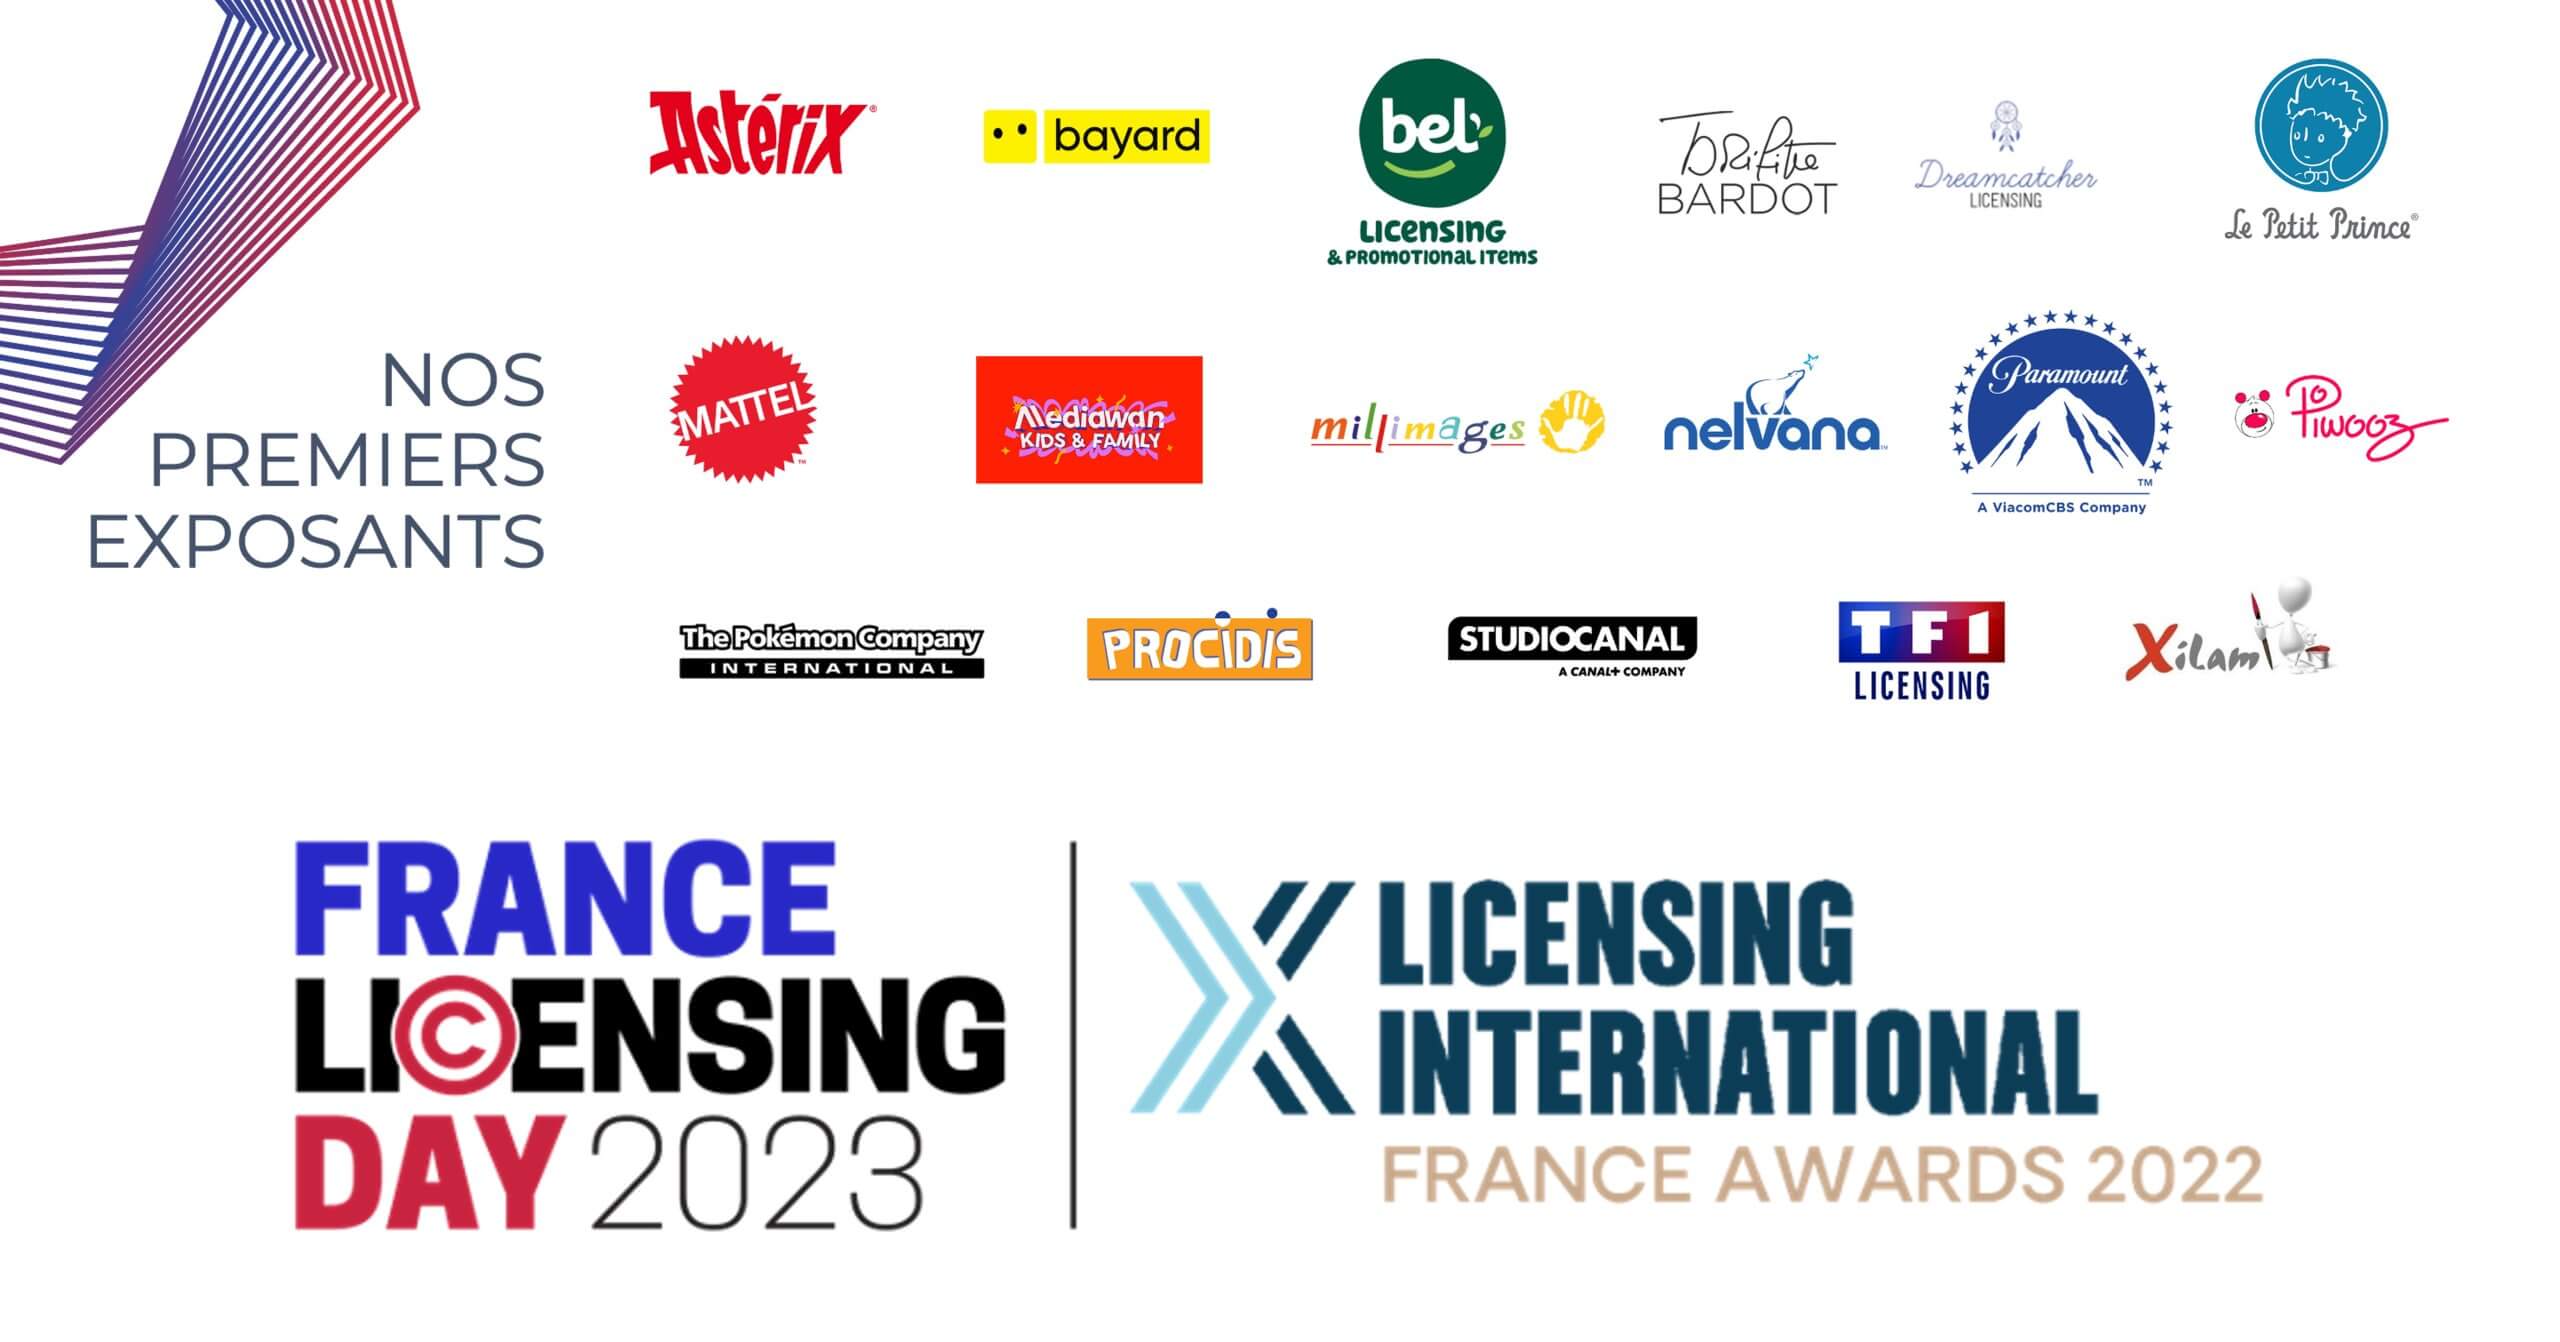 France Licensing Day & Licensing International Awards Licensing